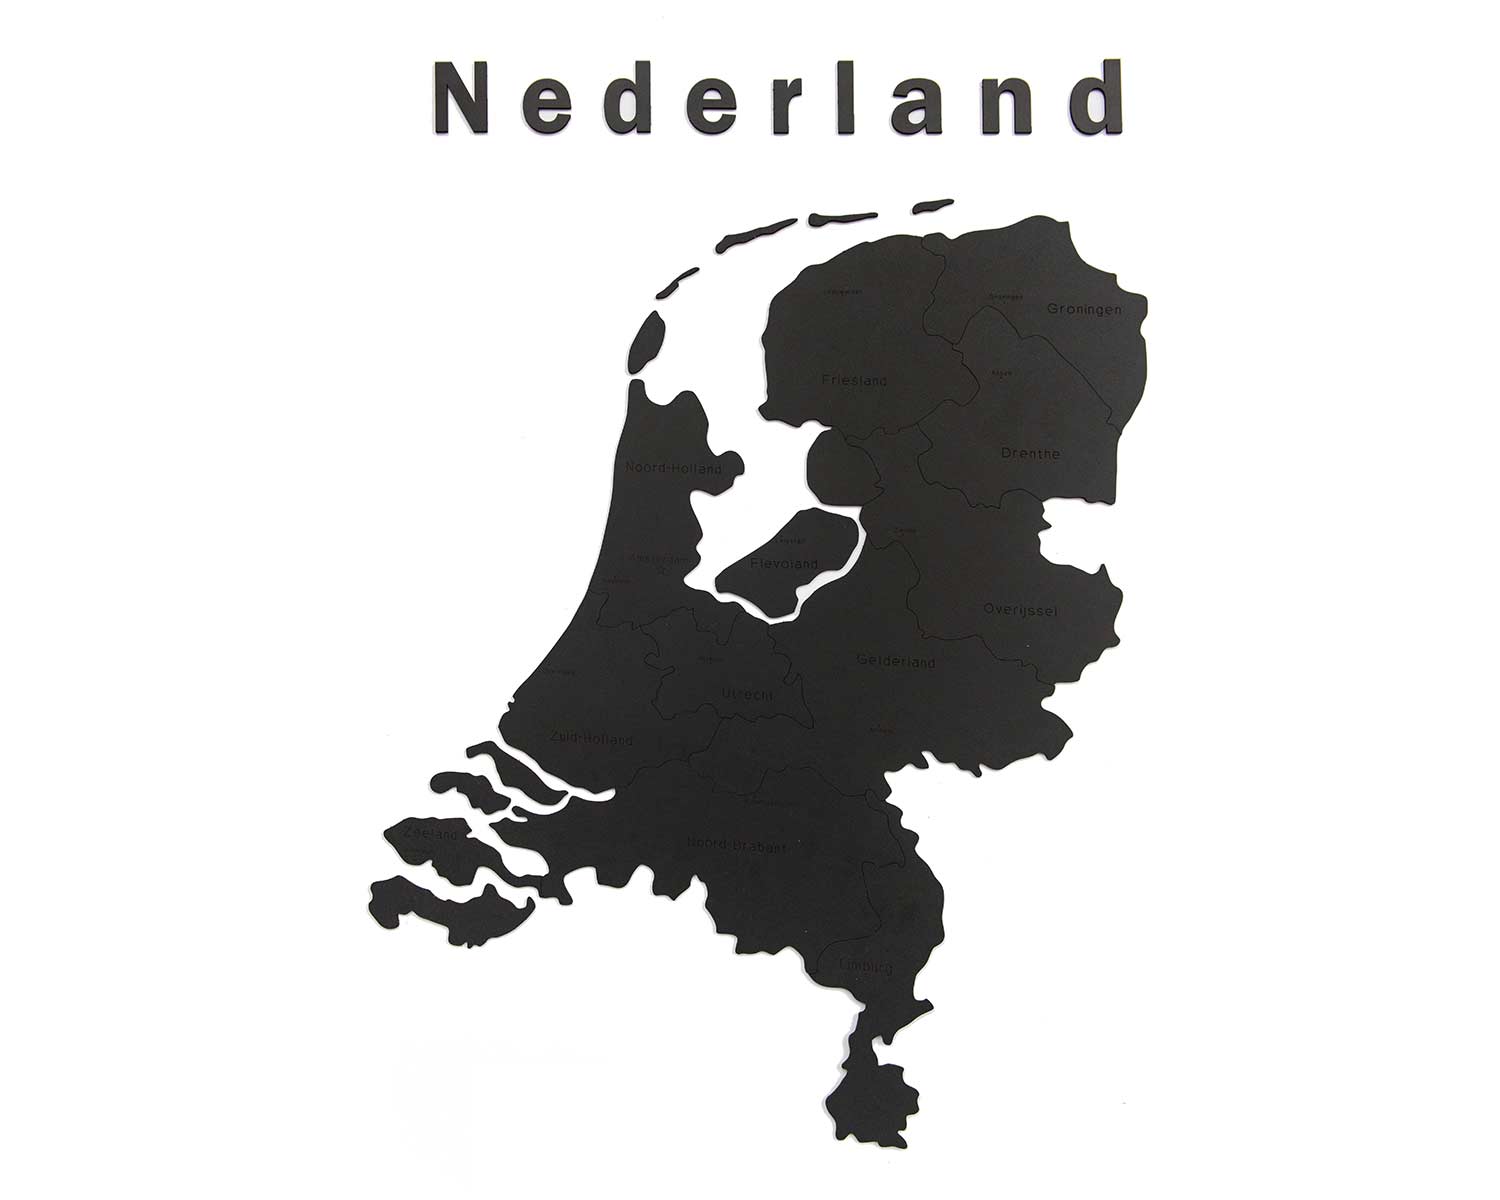 mimi country map nederland black ue05517 001